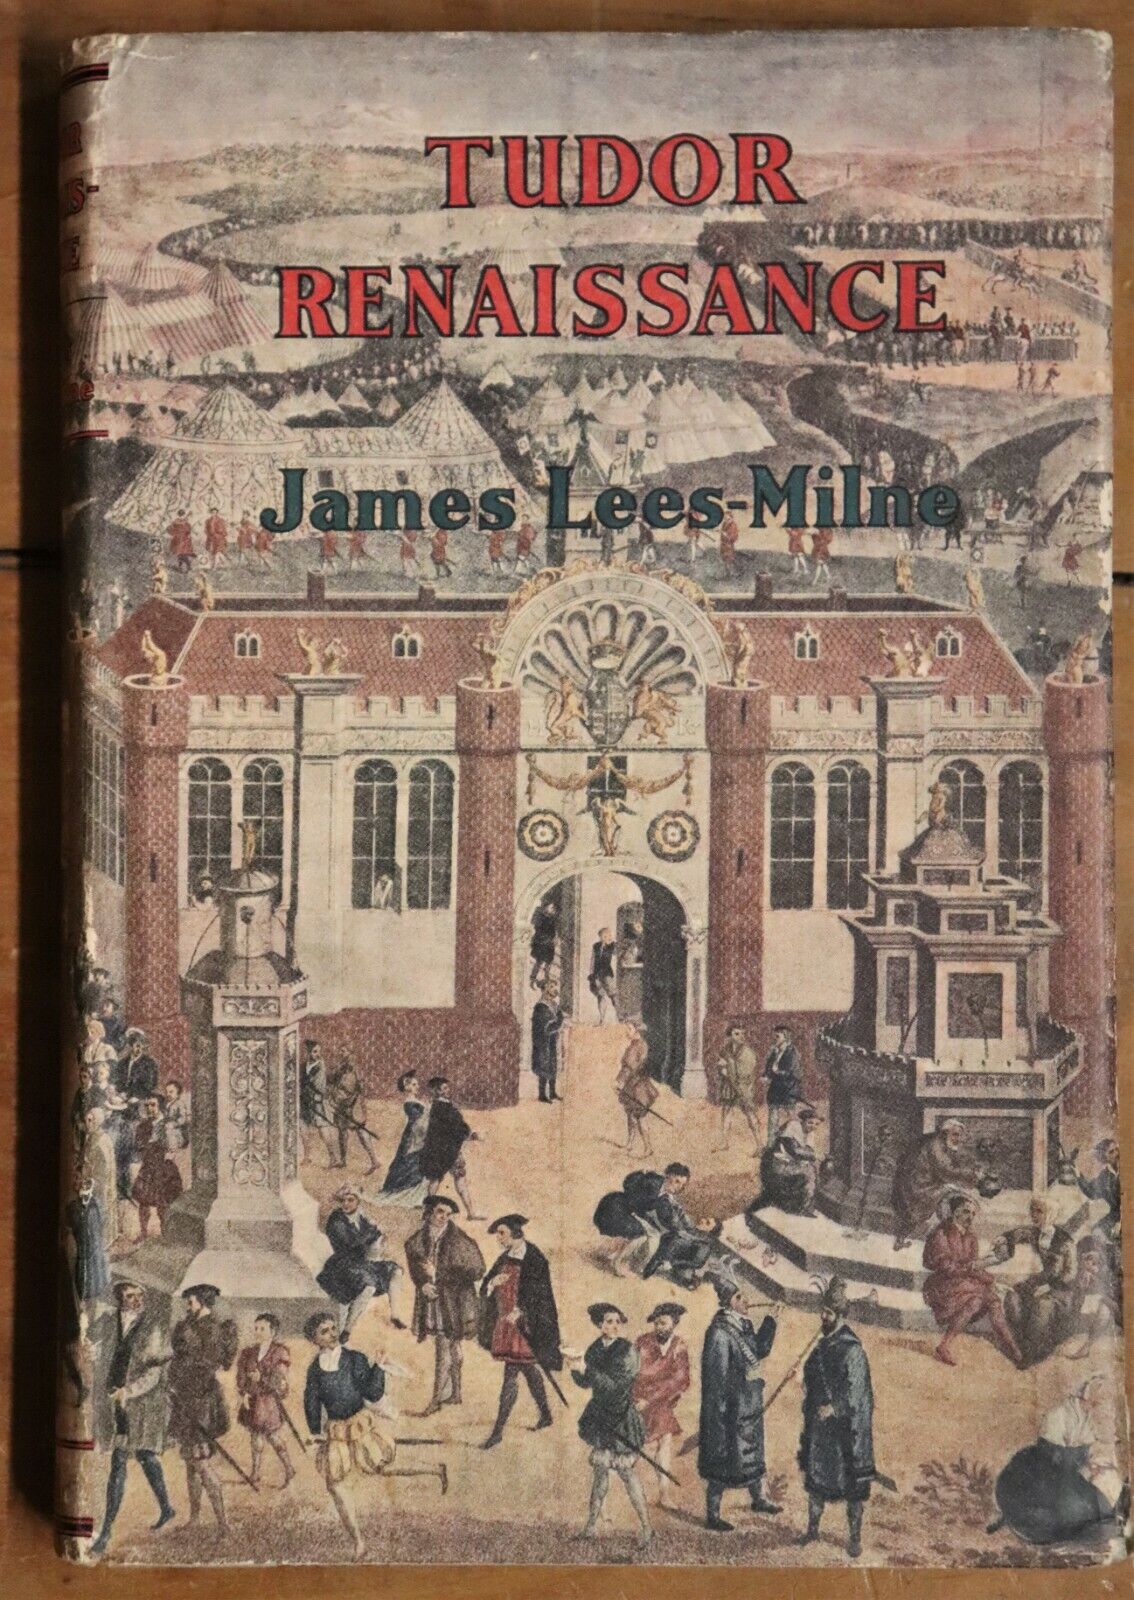 Tudor Renaissance - 1951 - First Edition - Rare Antiquarian Book